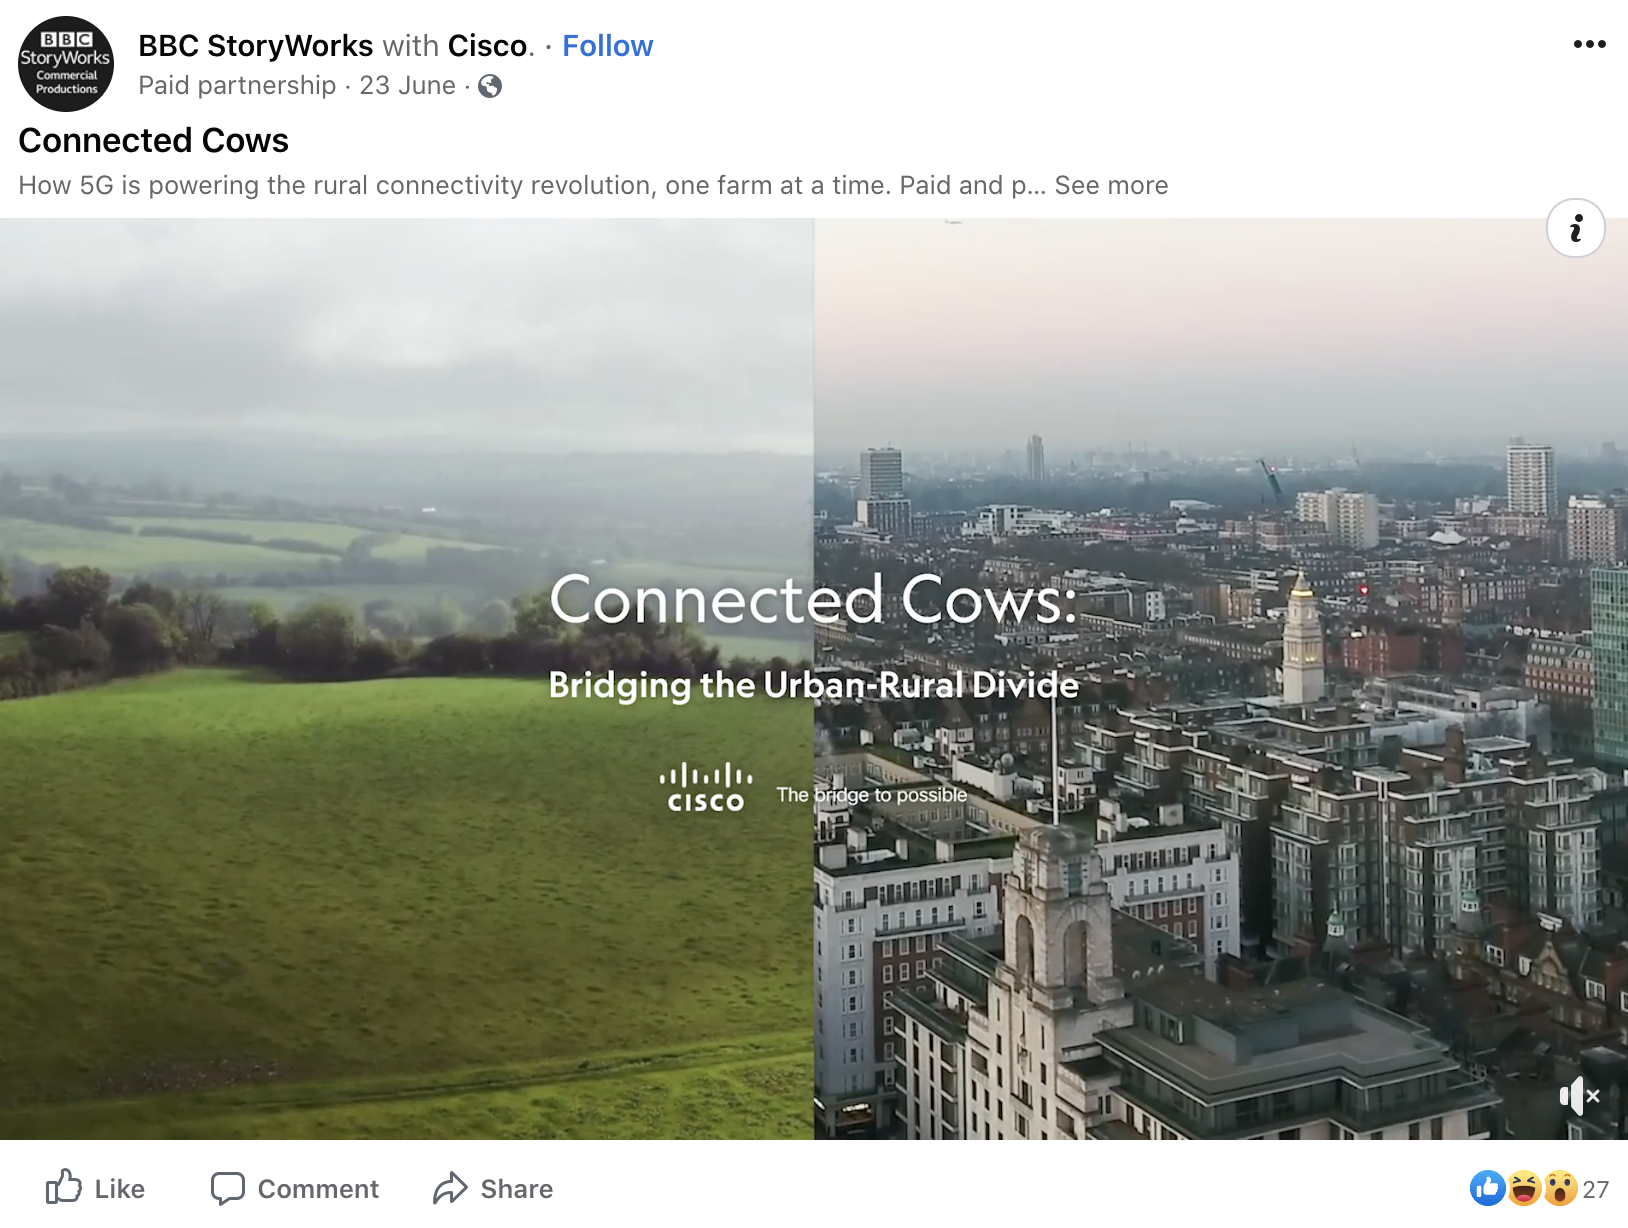 BBC StoryWorks and Cisco